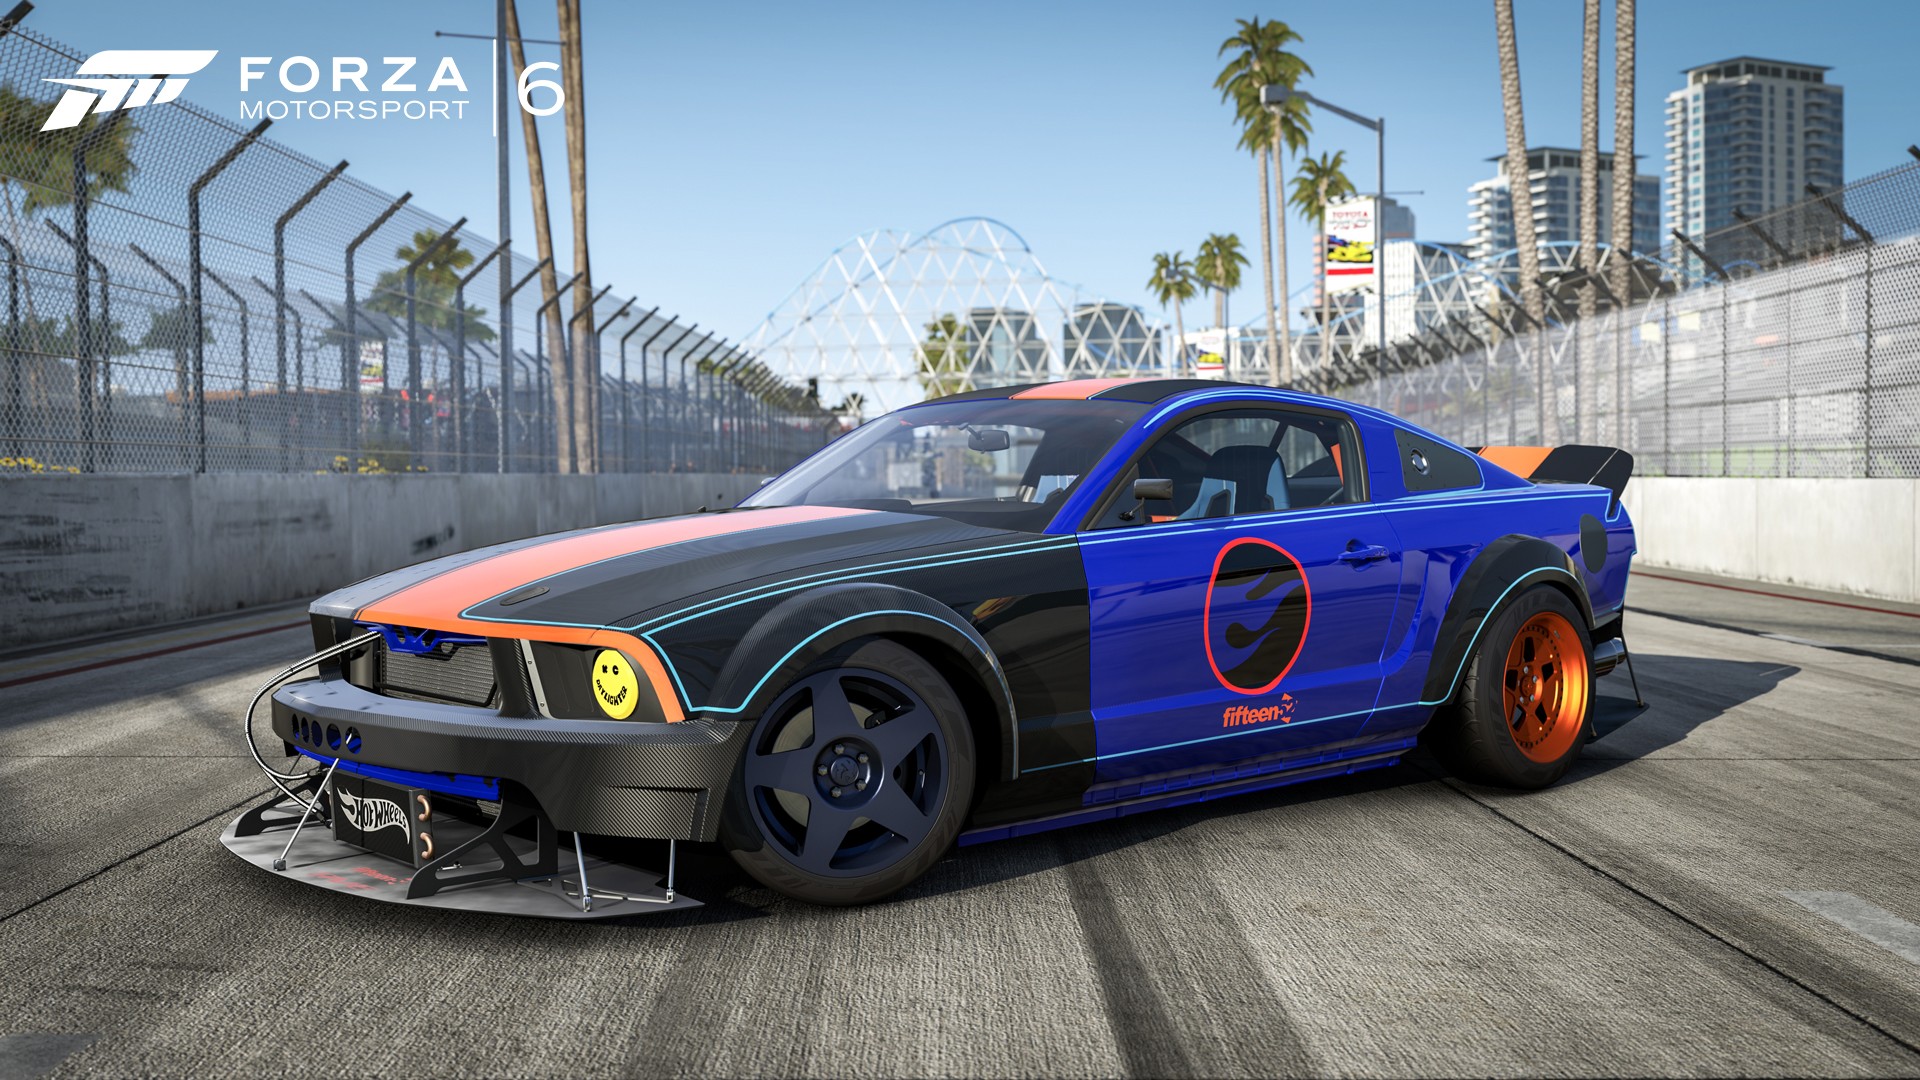 General 1920x1080 Forza Motorsport 6 car vehicle video games Turn 10 Studios